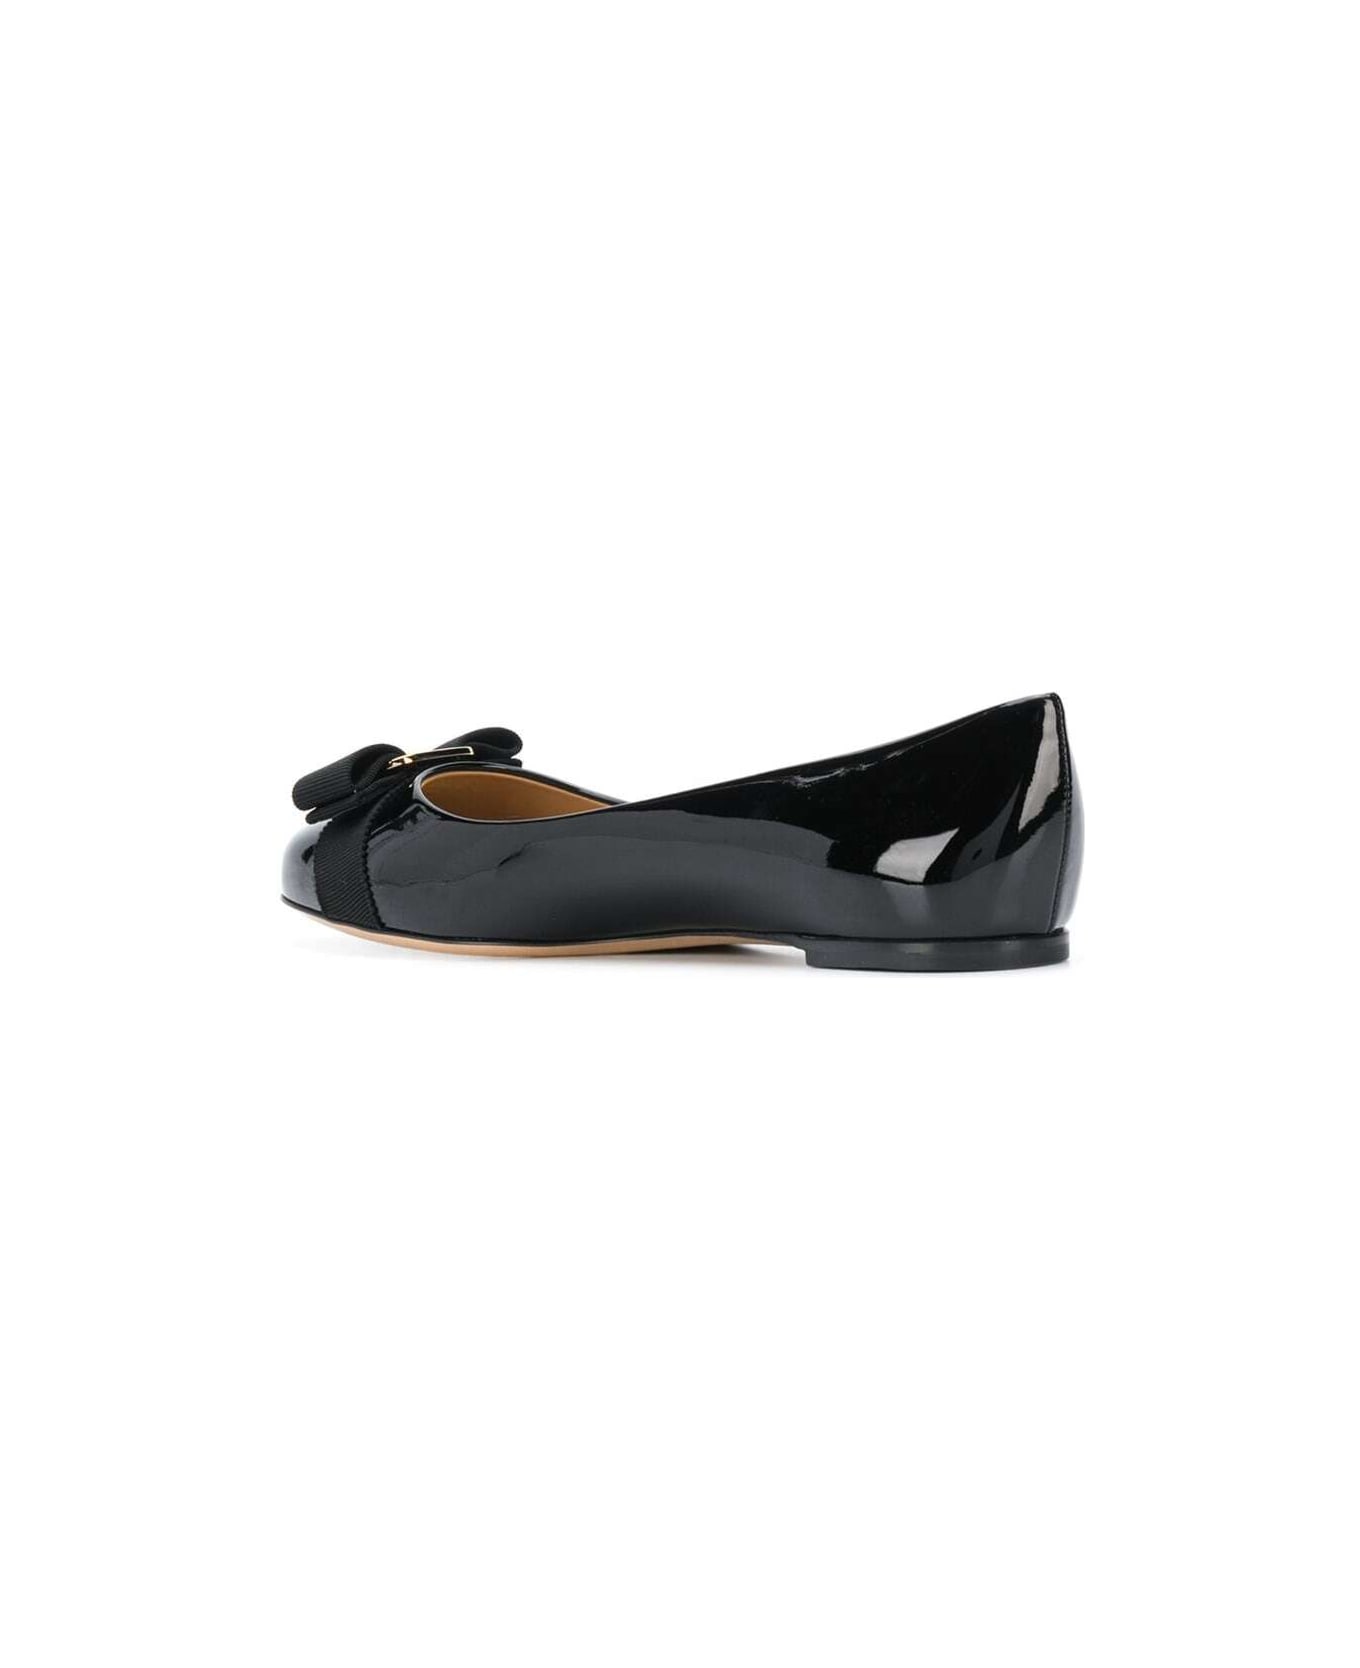 Ferragamo Varina Patent Leather Flat Shoes With Bow - Black